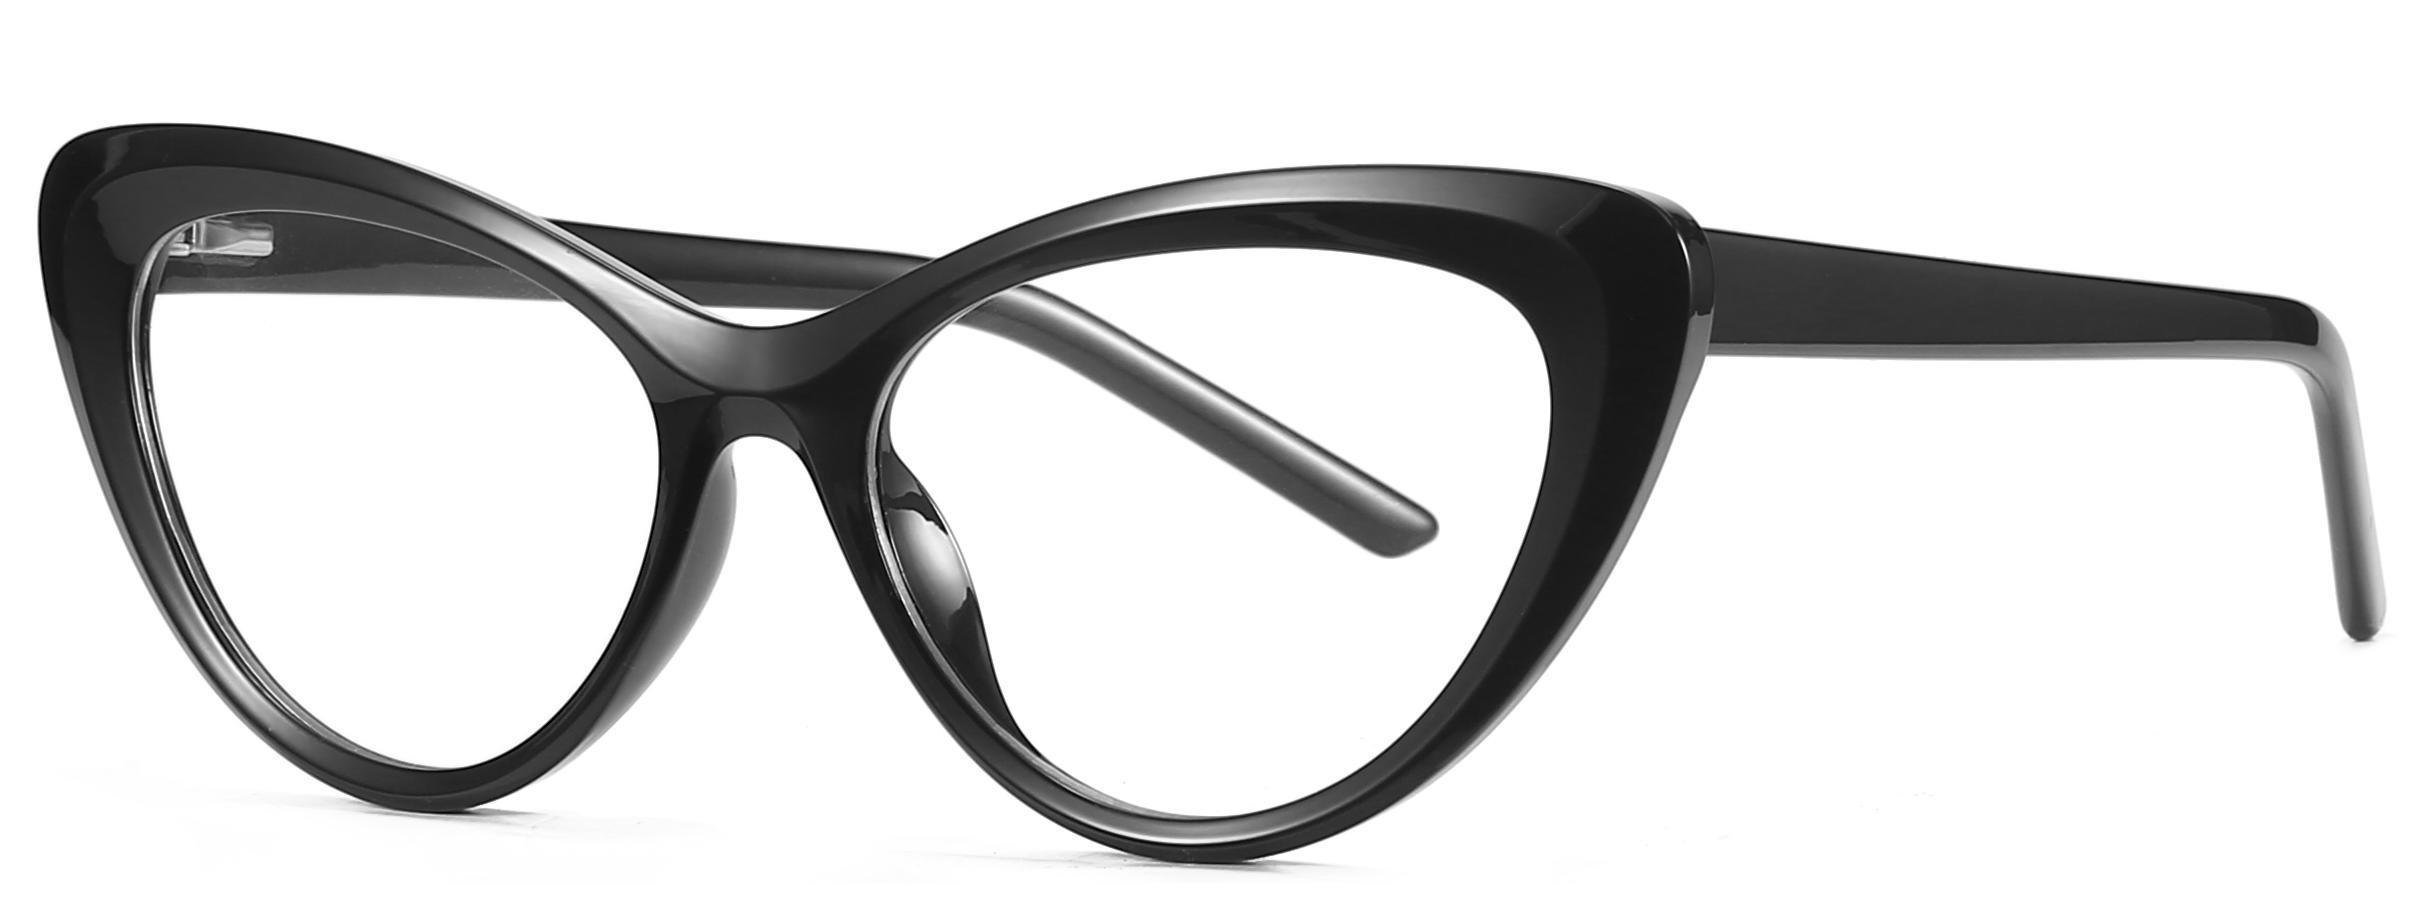 Productos listos Fashion Cat Eye Shape TR90+CP Anti-Blue Light Lens Frames ópticos #2020